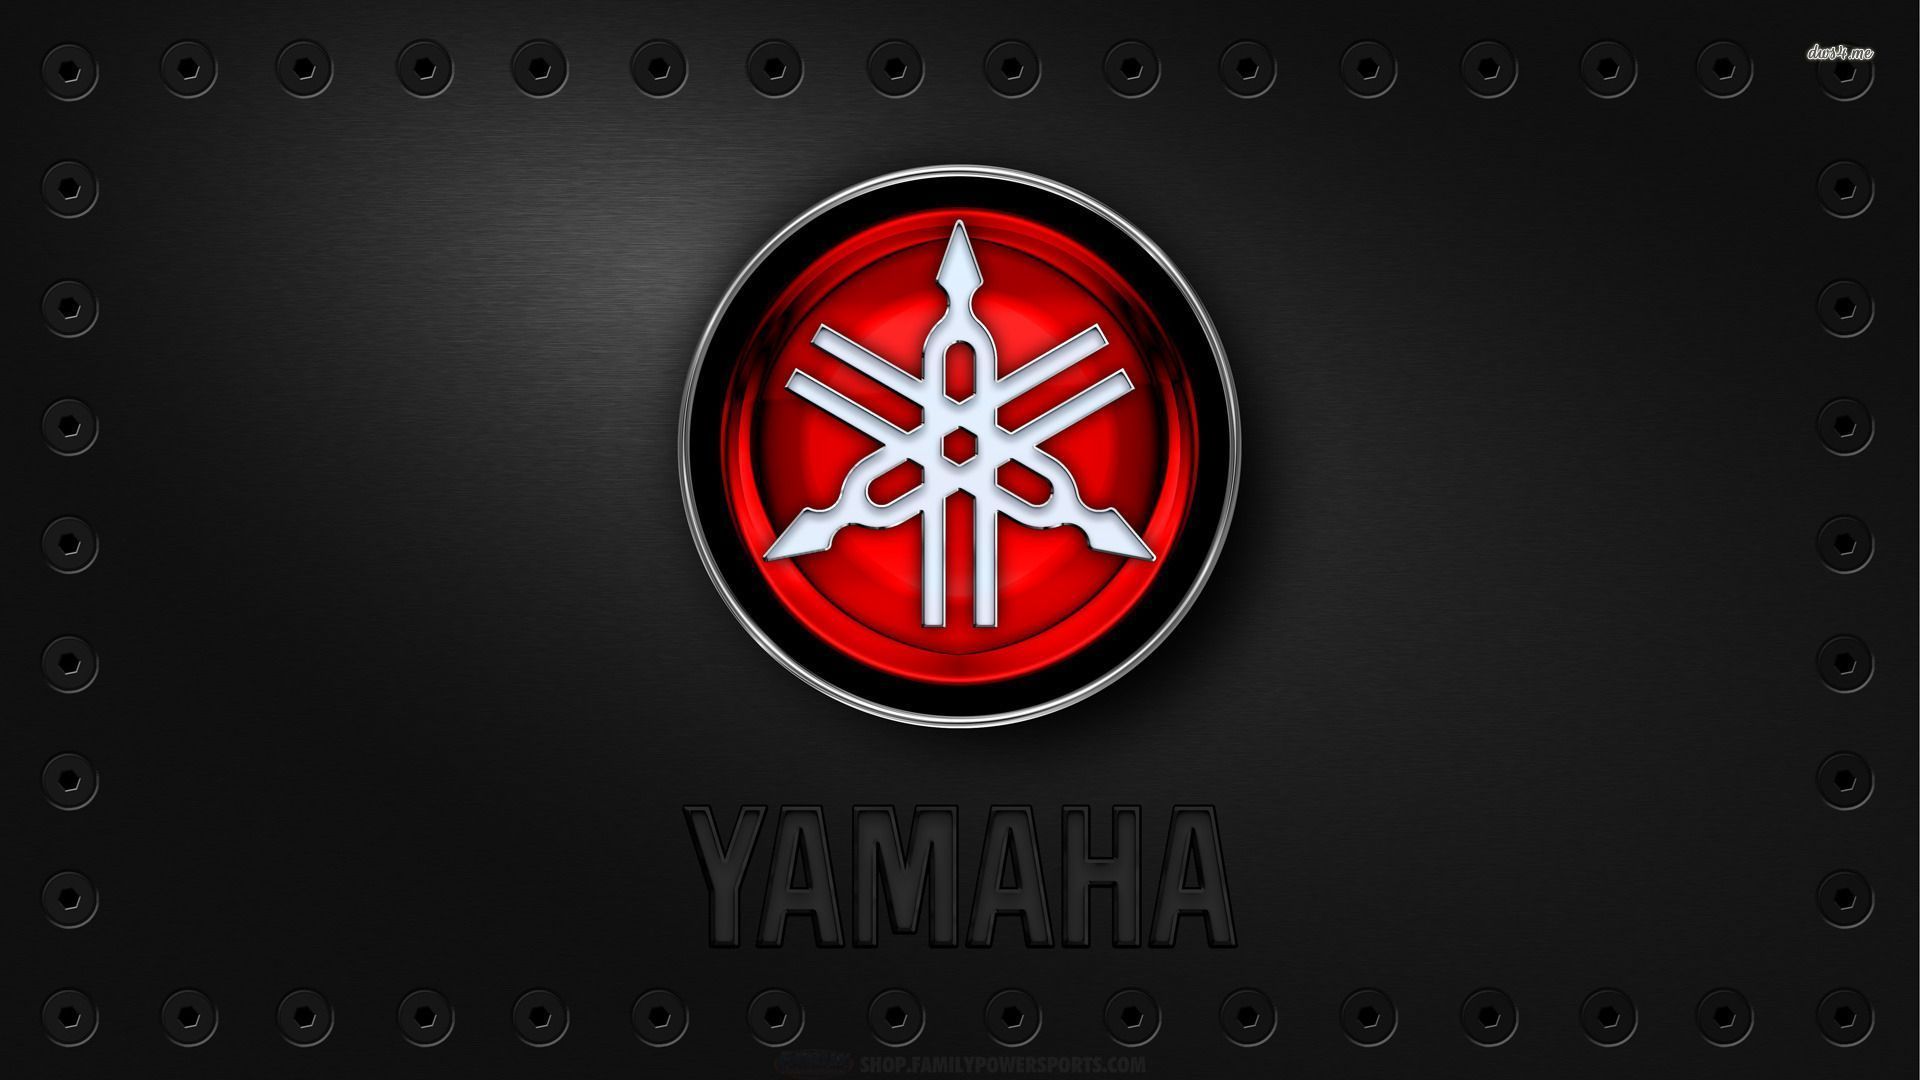 Yamaha Logo wallpaper - Motorcycle wallpapers - #6341